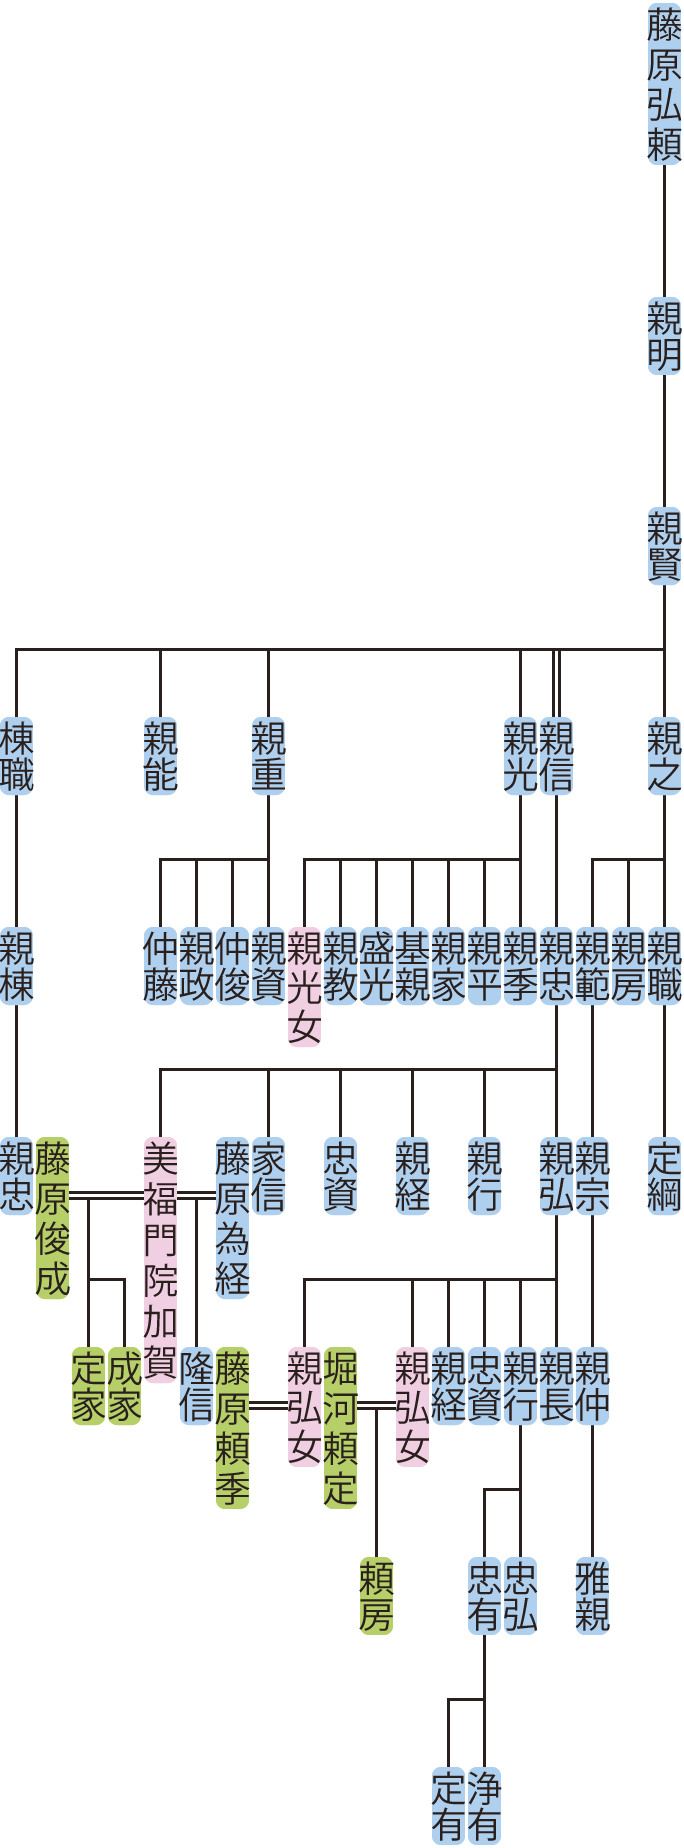 藤原親賢の系図